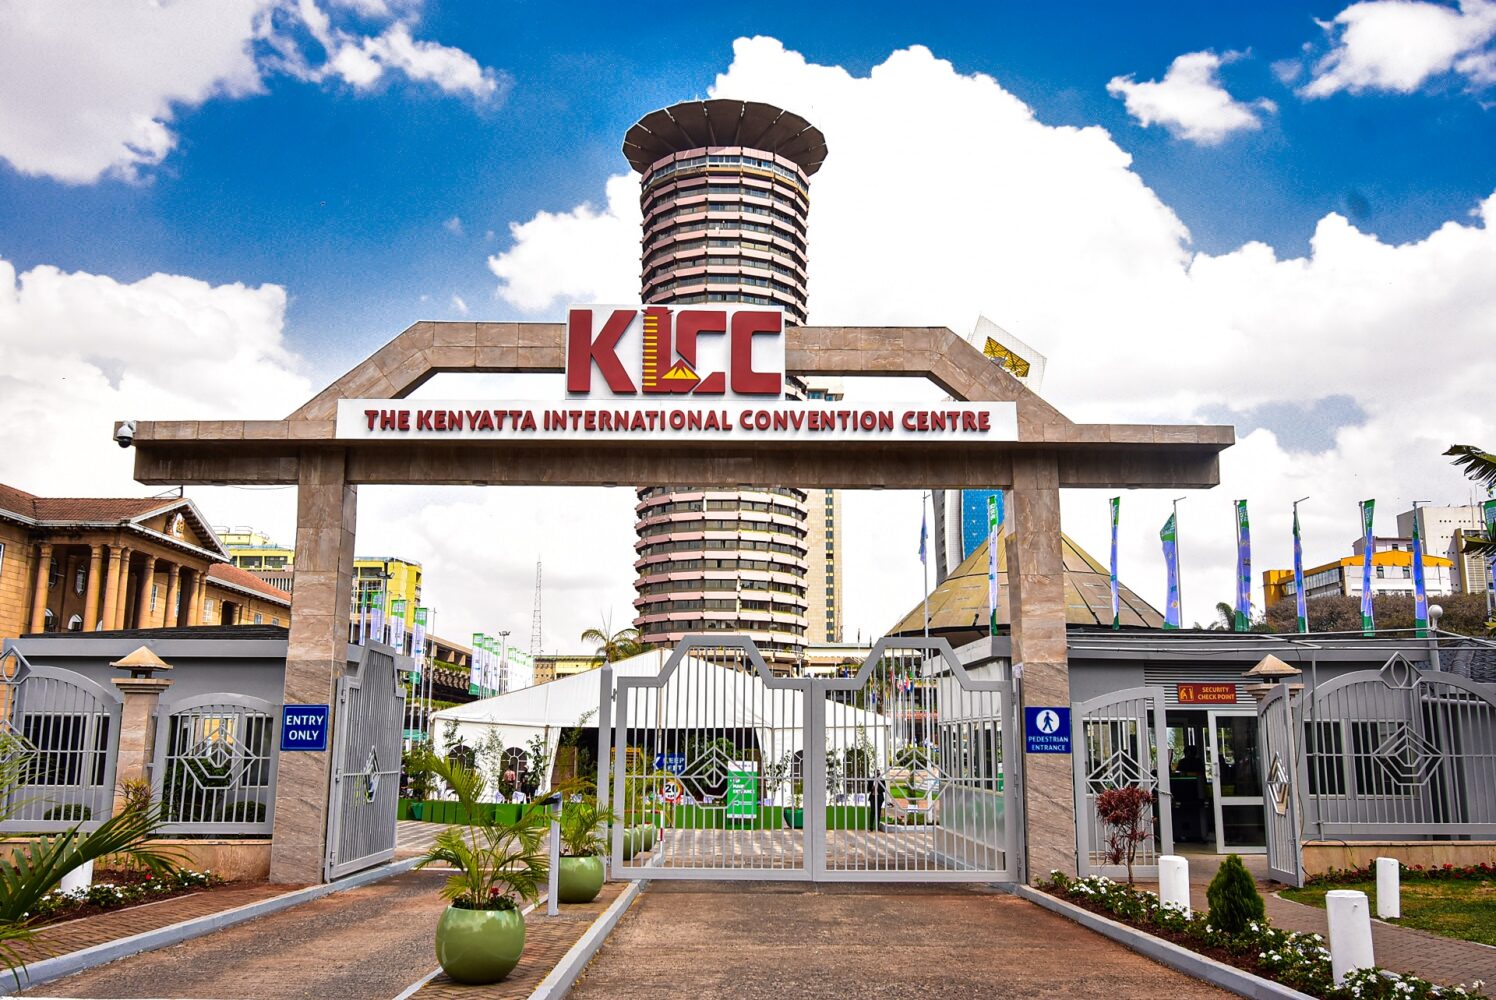 The Kenyatta International Convention Centre (KICC) entrance in Nairobi.